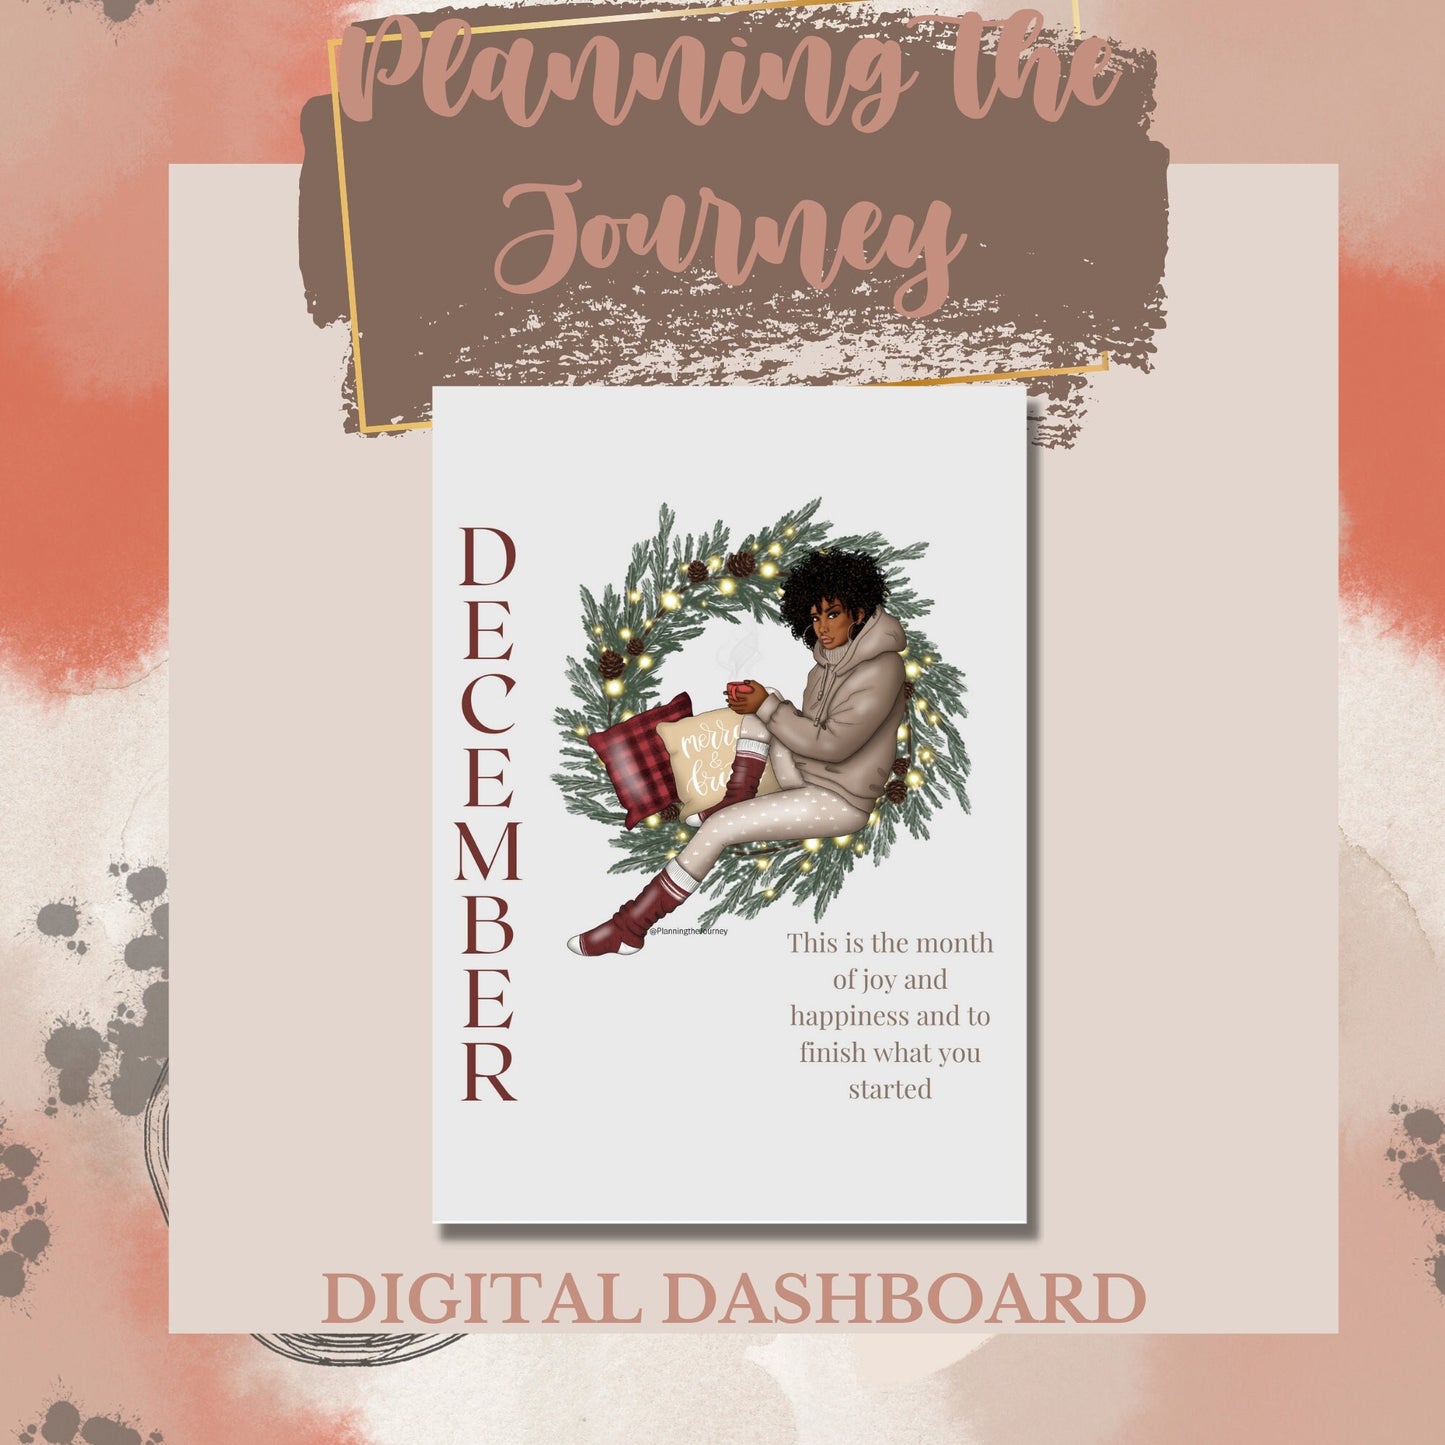 Digital Dashboard, December Wreath Girl